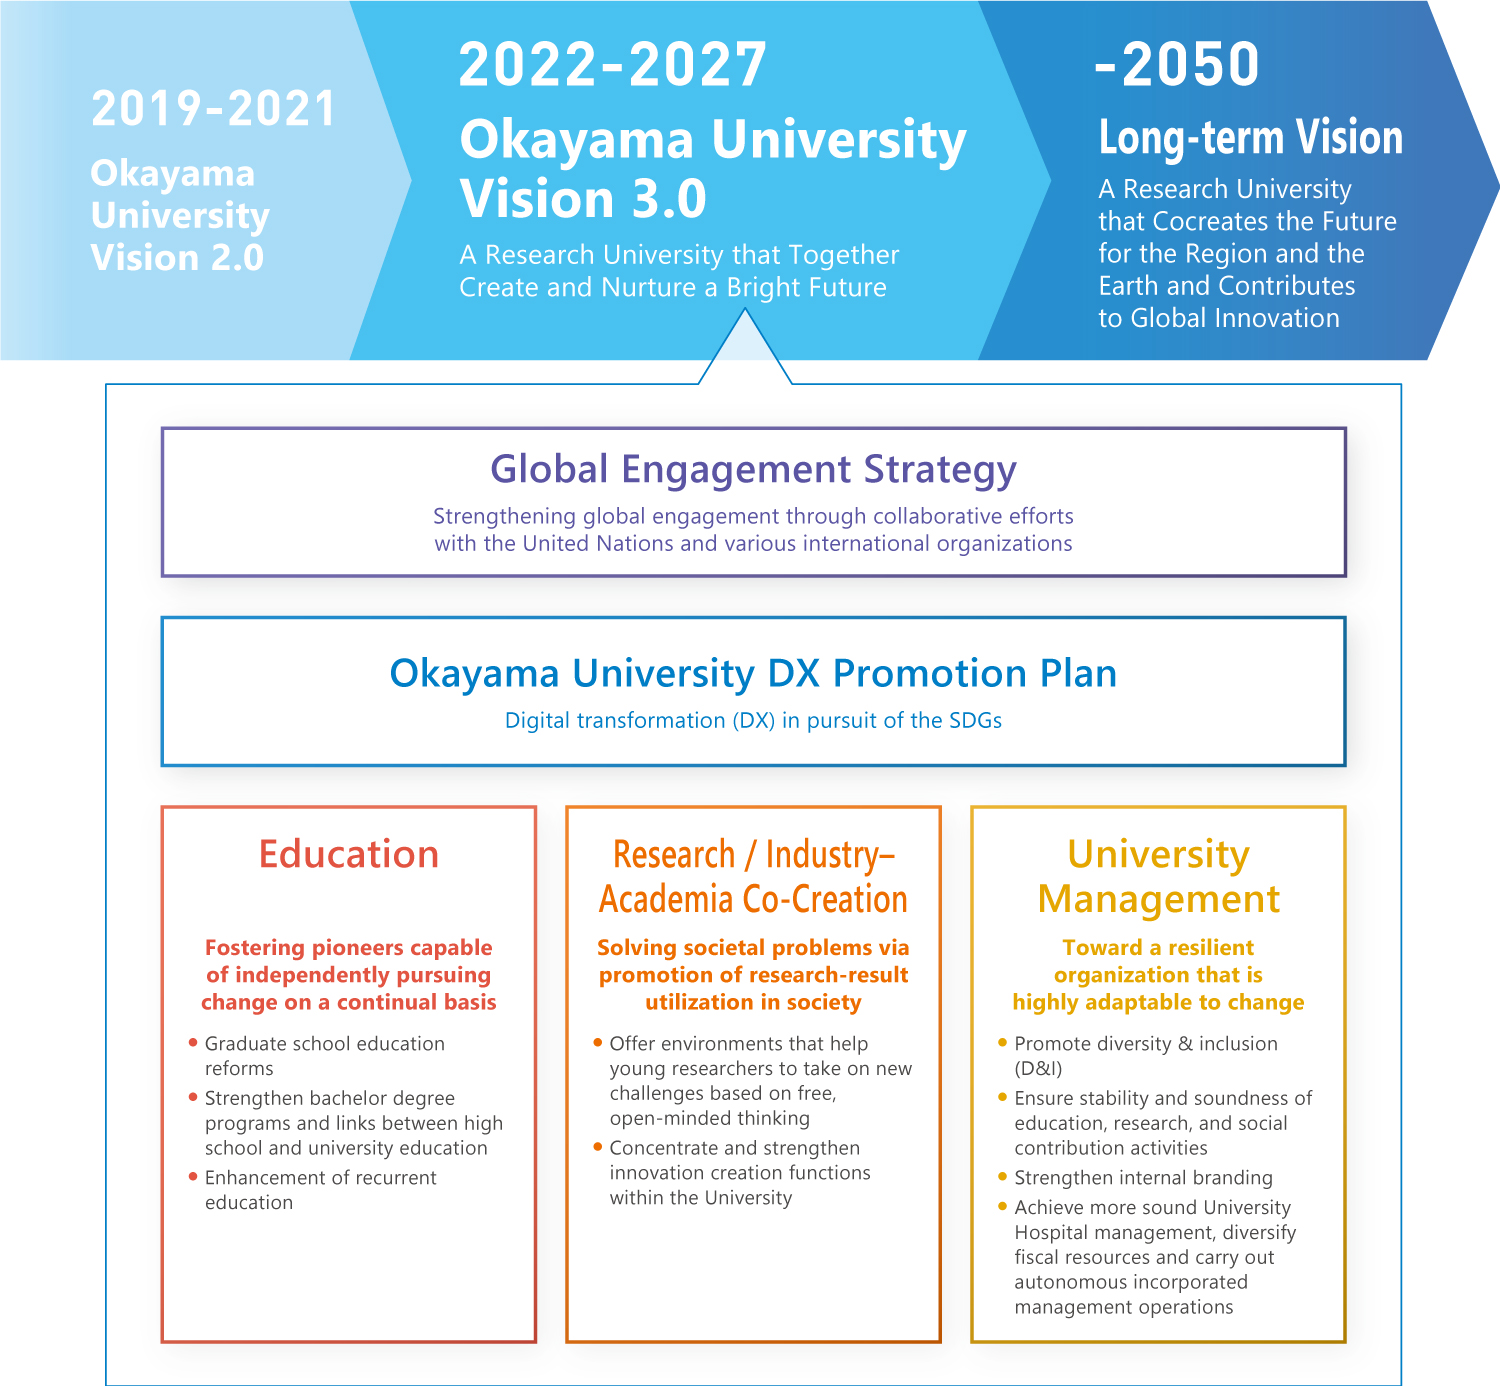 Okayama University Vision 2.0 and Okayama University Long-term Vision 2030